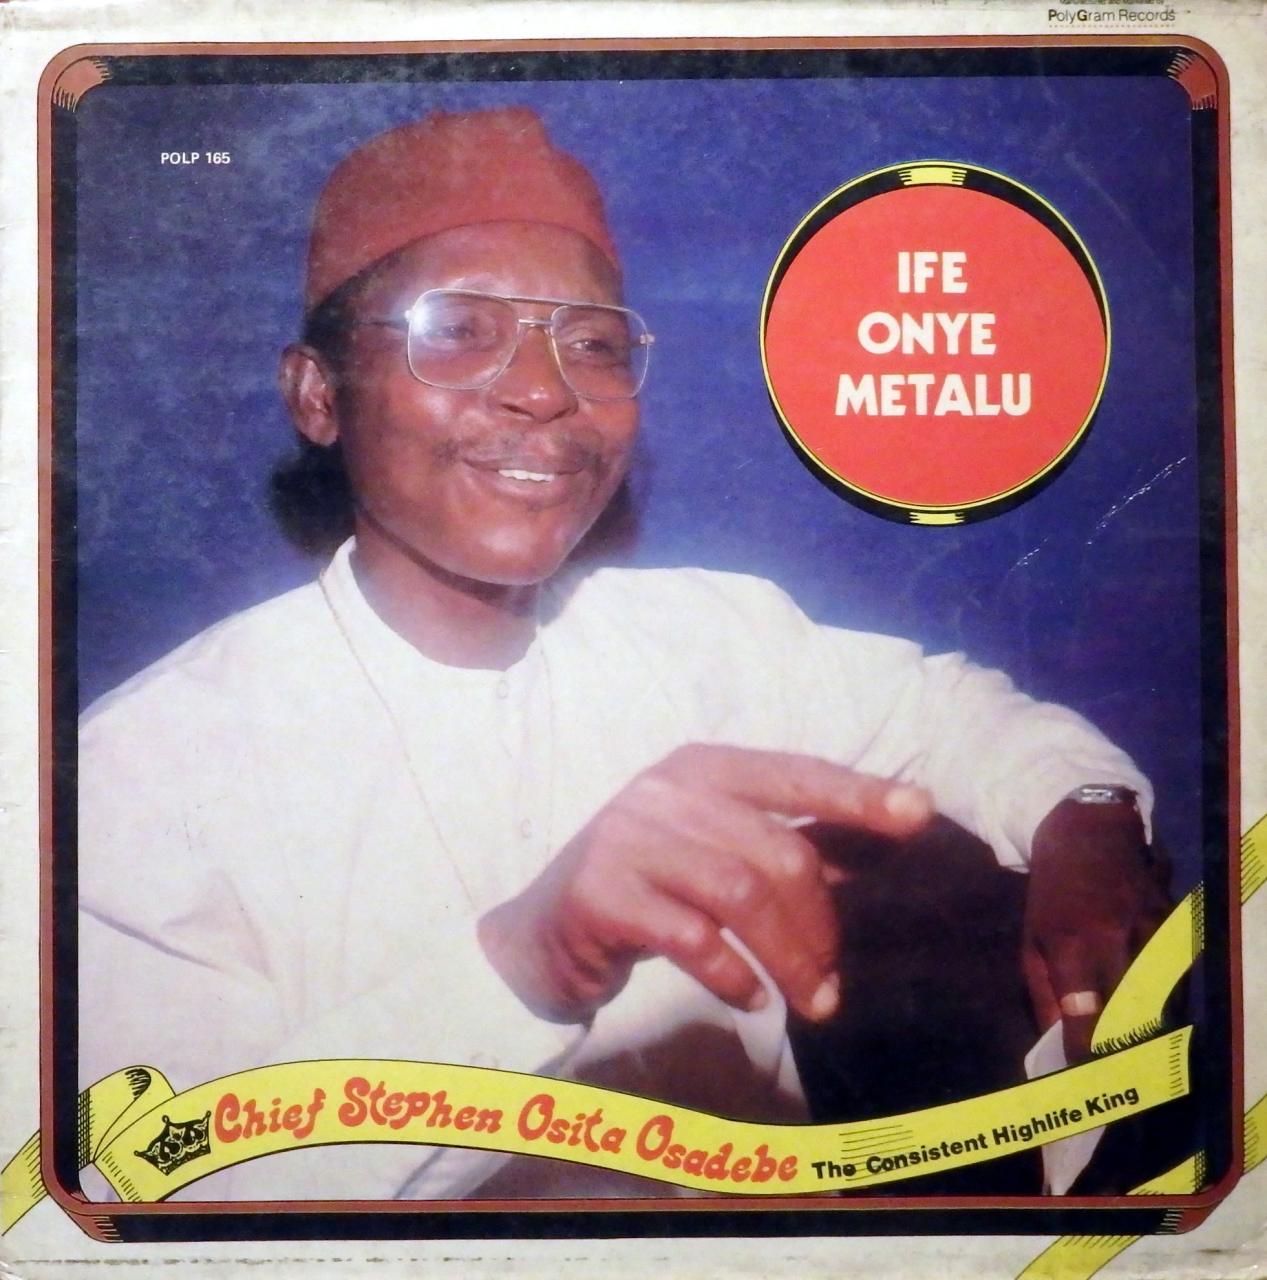 Osita Osadebe - Echiebuka